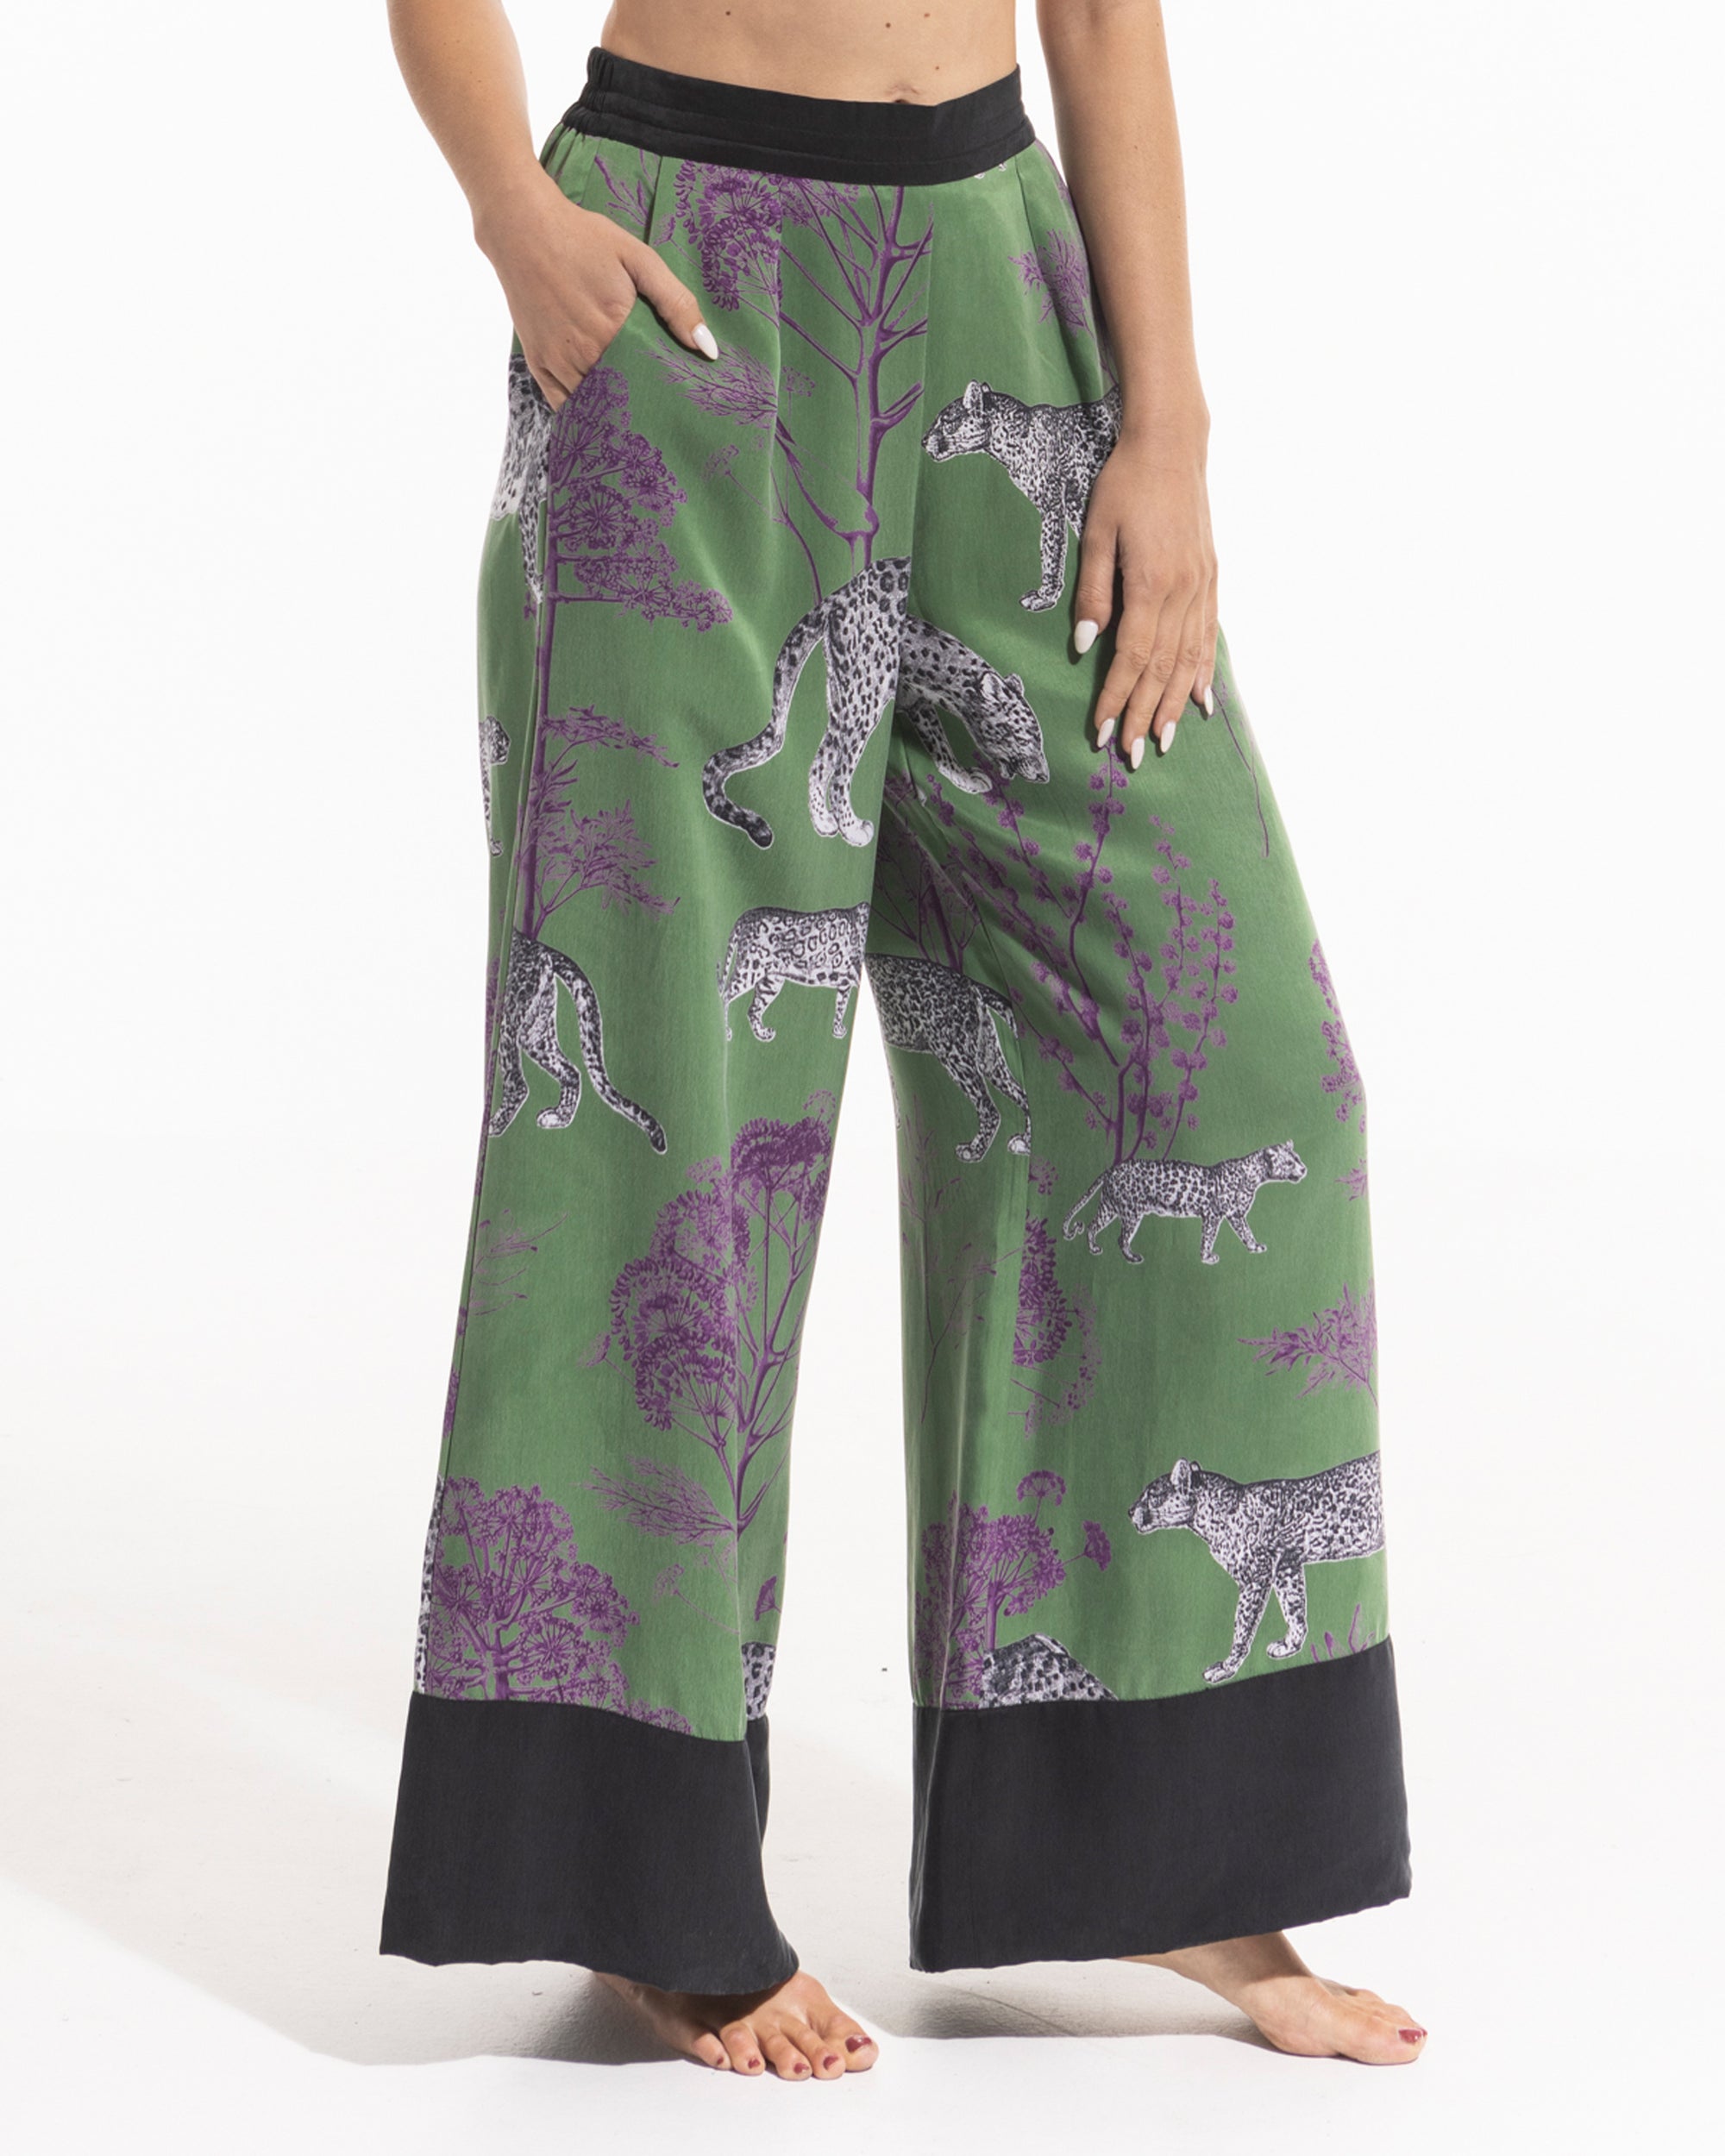 niLuu Women's Pants HARPER LENNON Size S - Toytoise